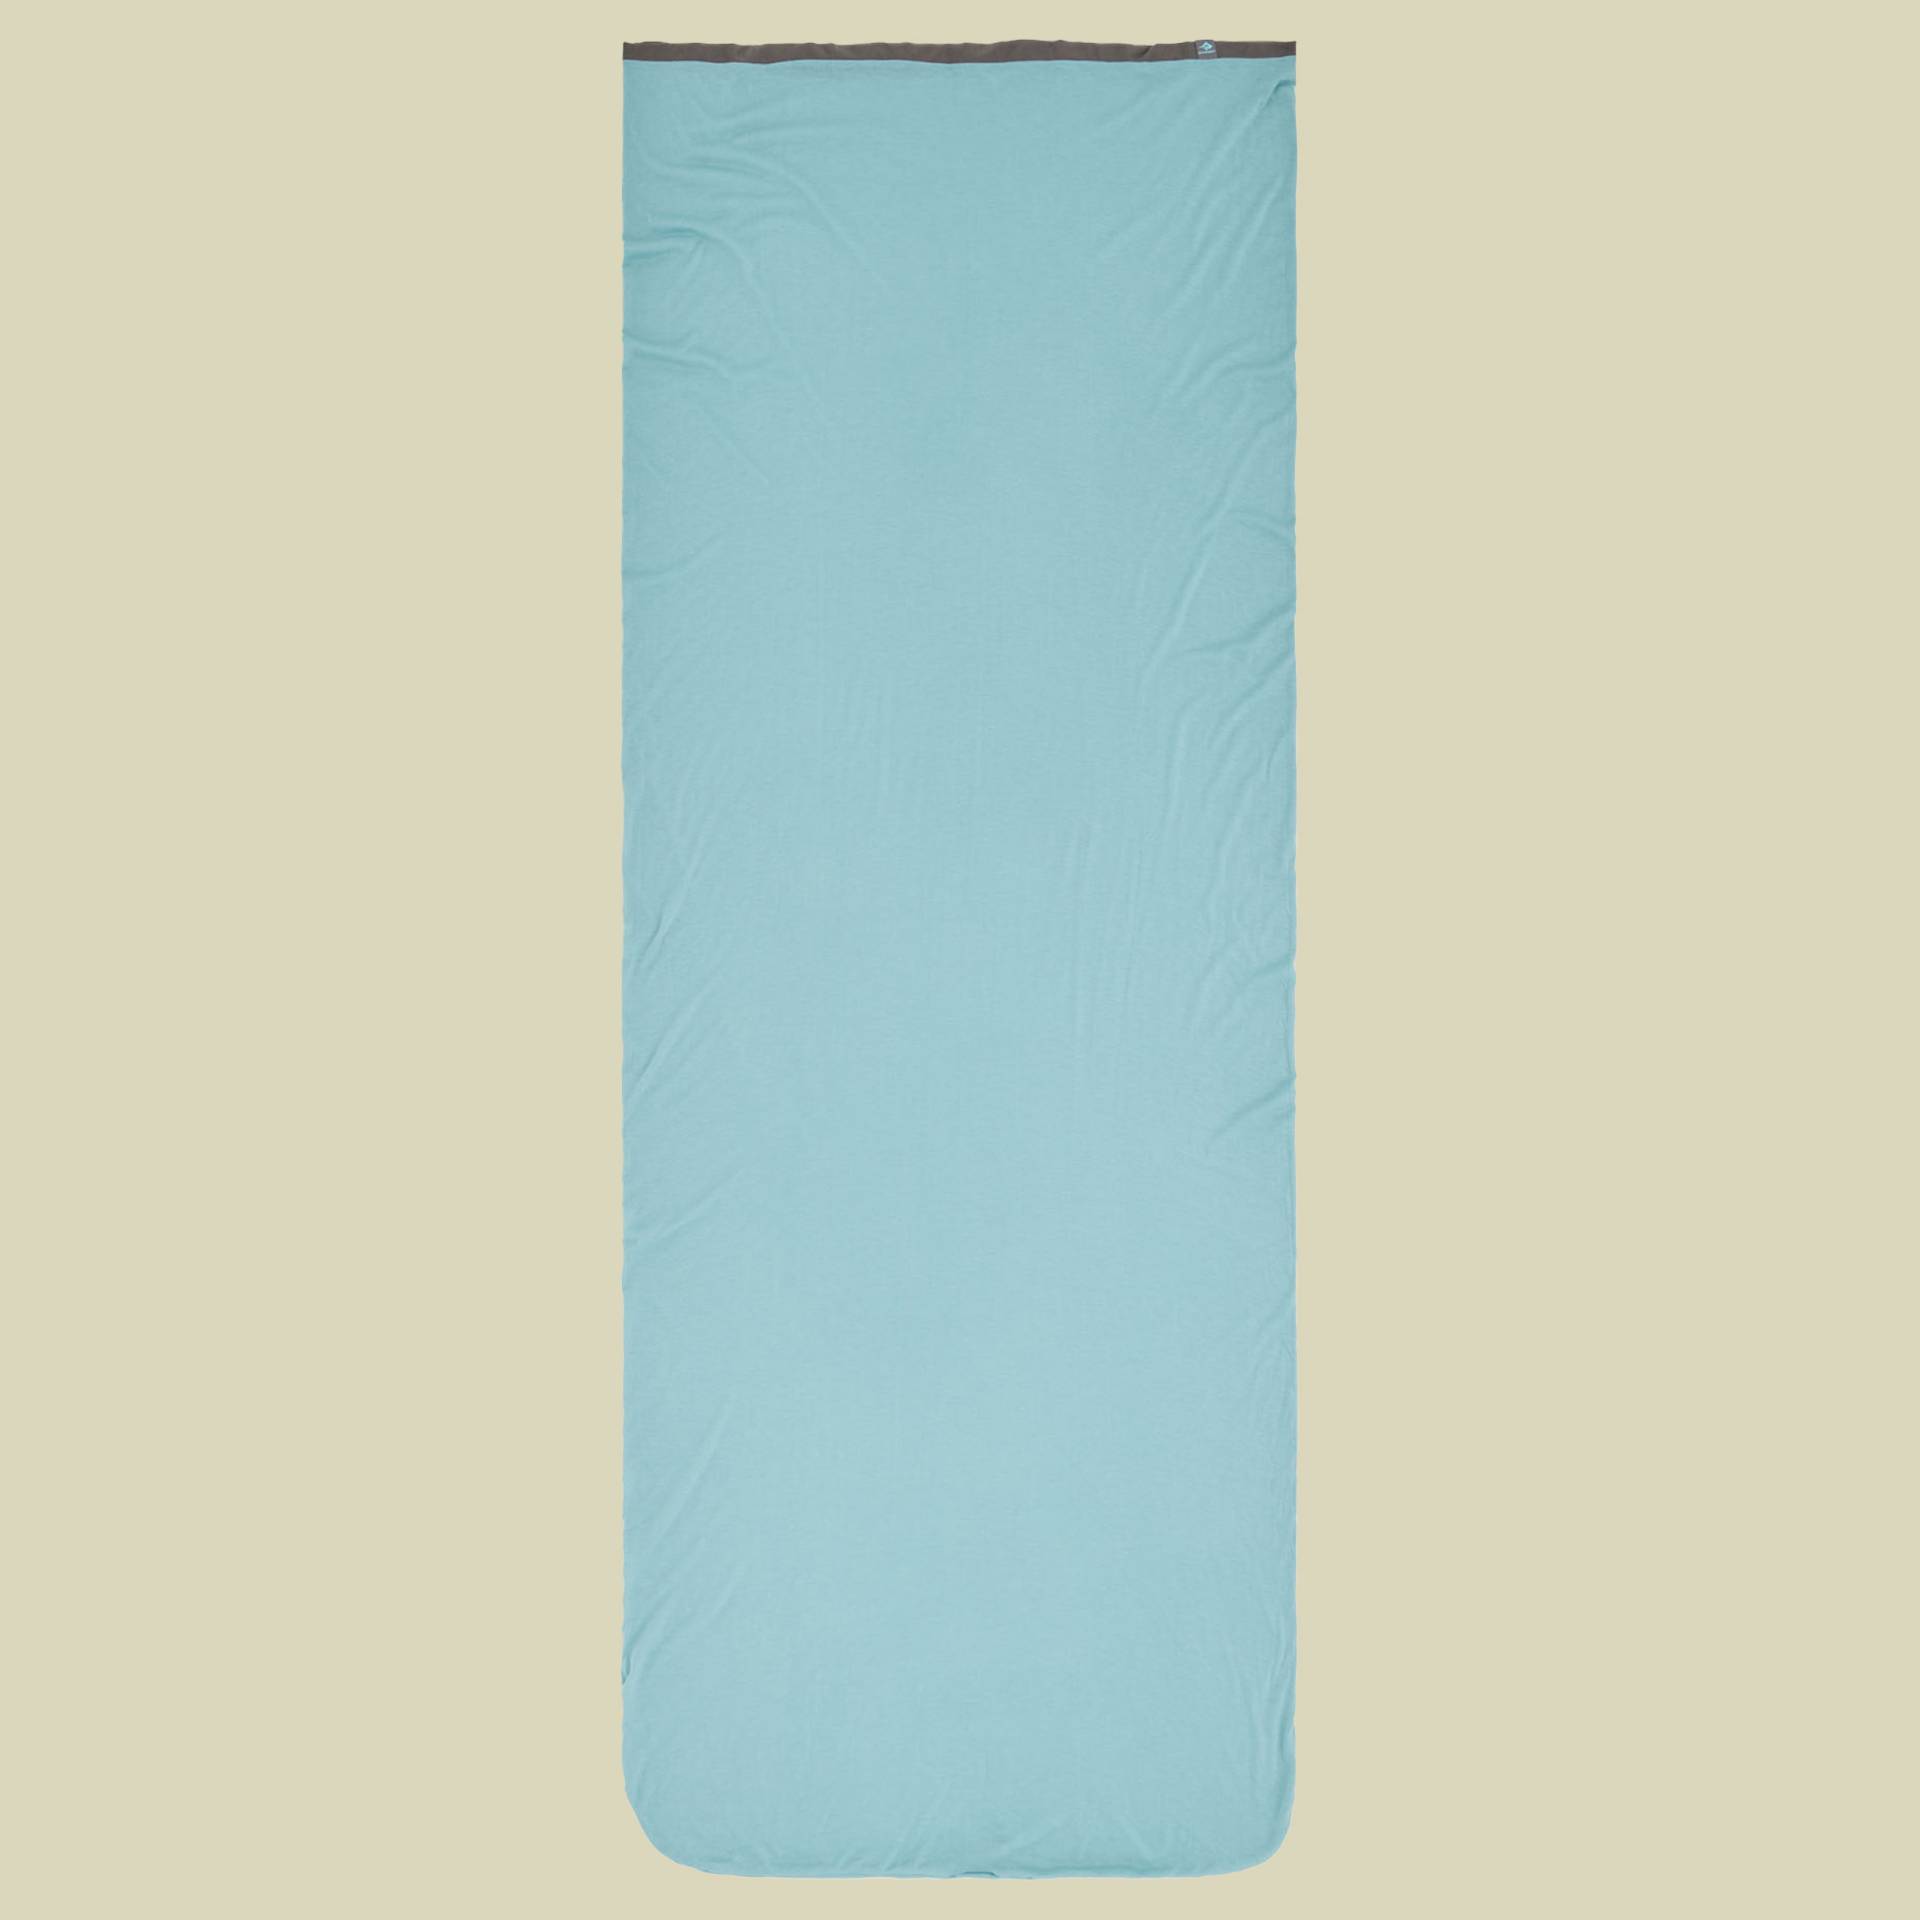 Comfort Blend Sleeping Bag Liner rechteckig blau - Rectangular Farbe aqua sea blue von Sea to Summit